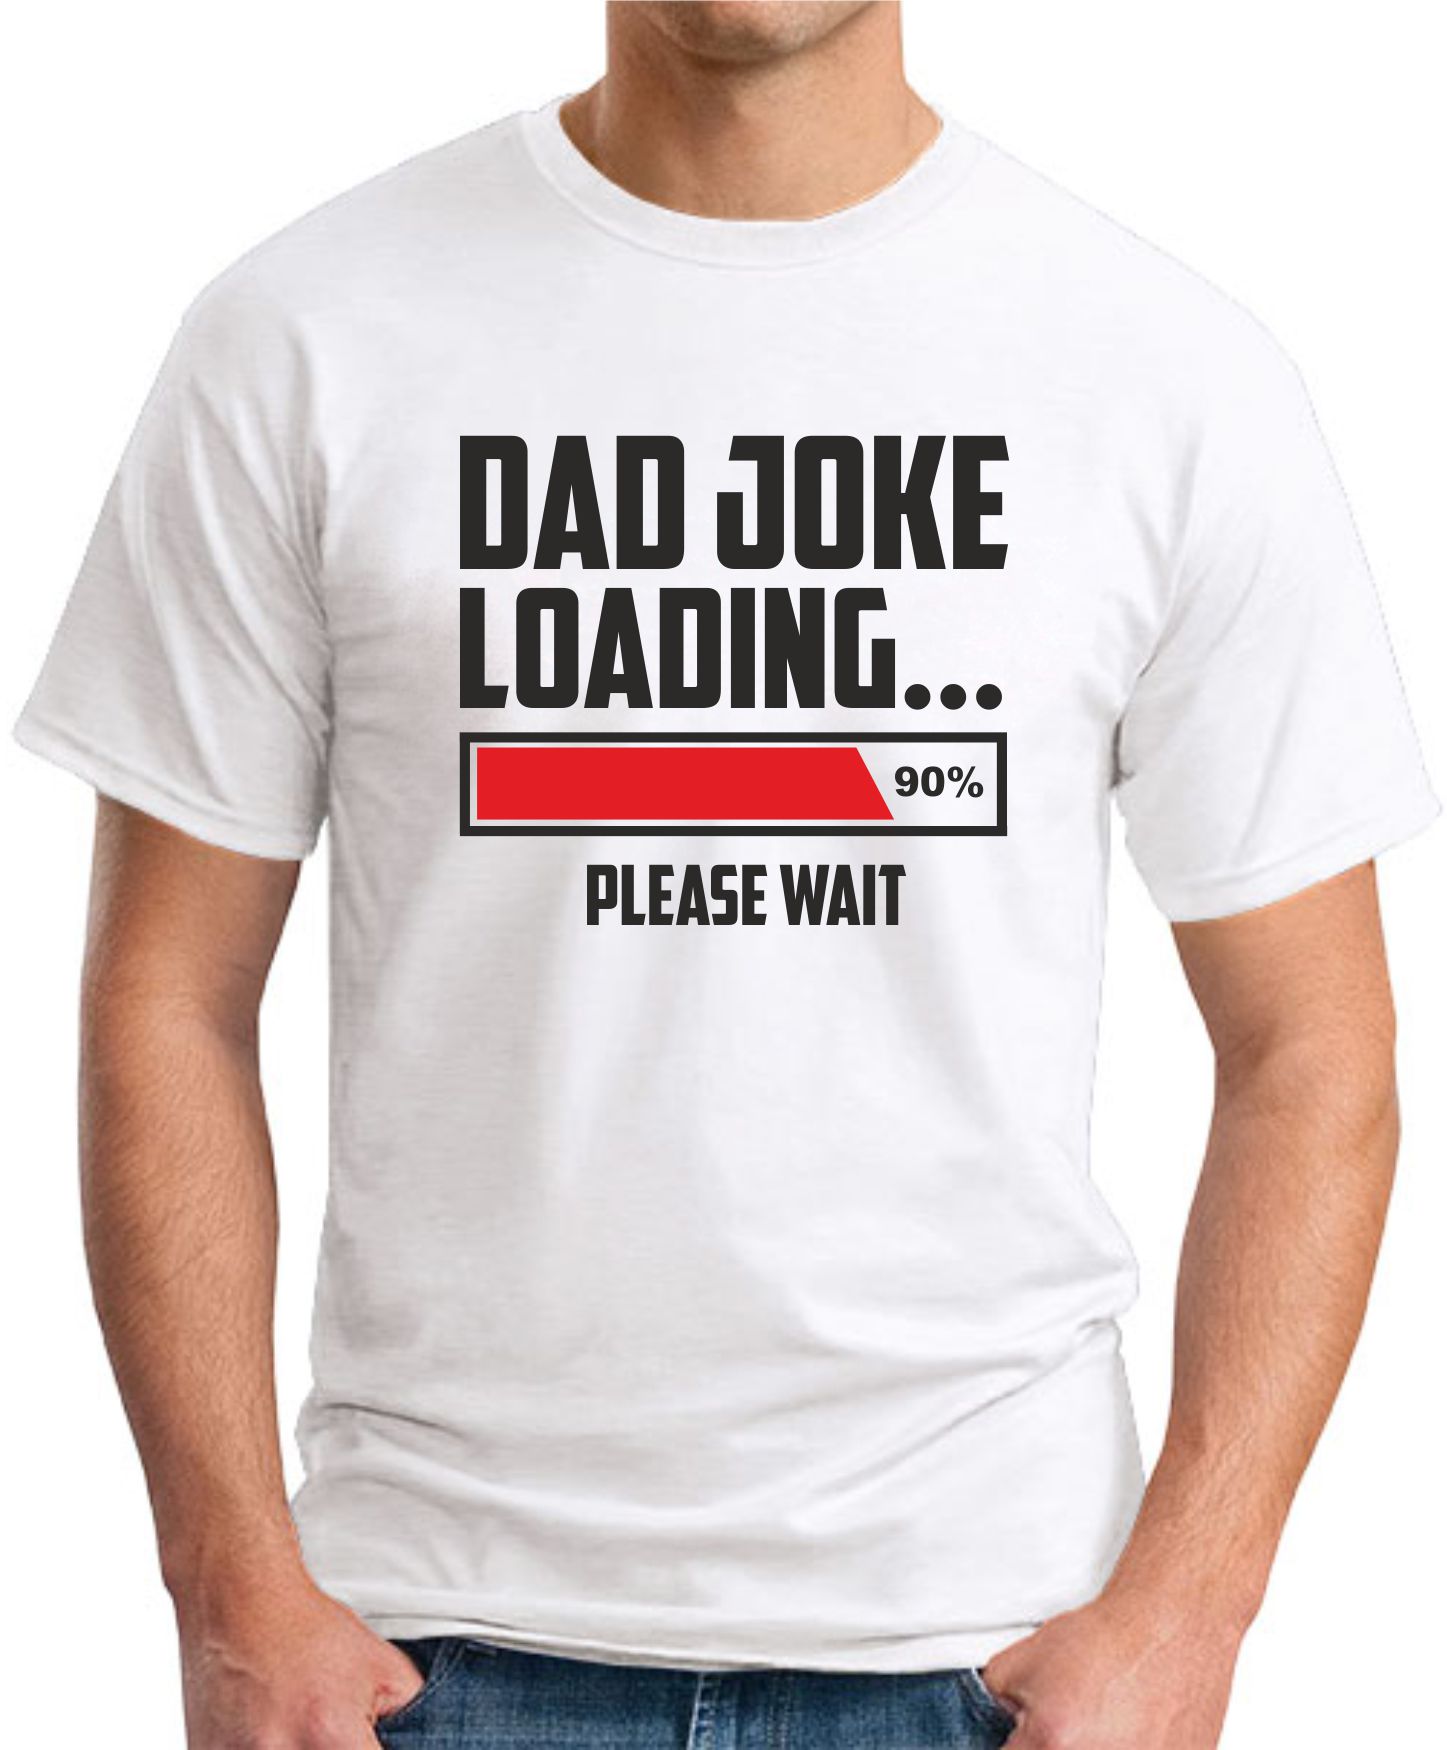 Download DAD JOKE LOADING T-SHIRT - GeekyTees